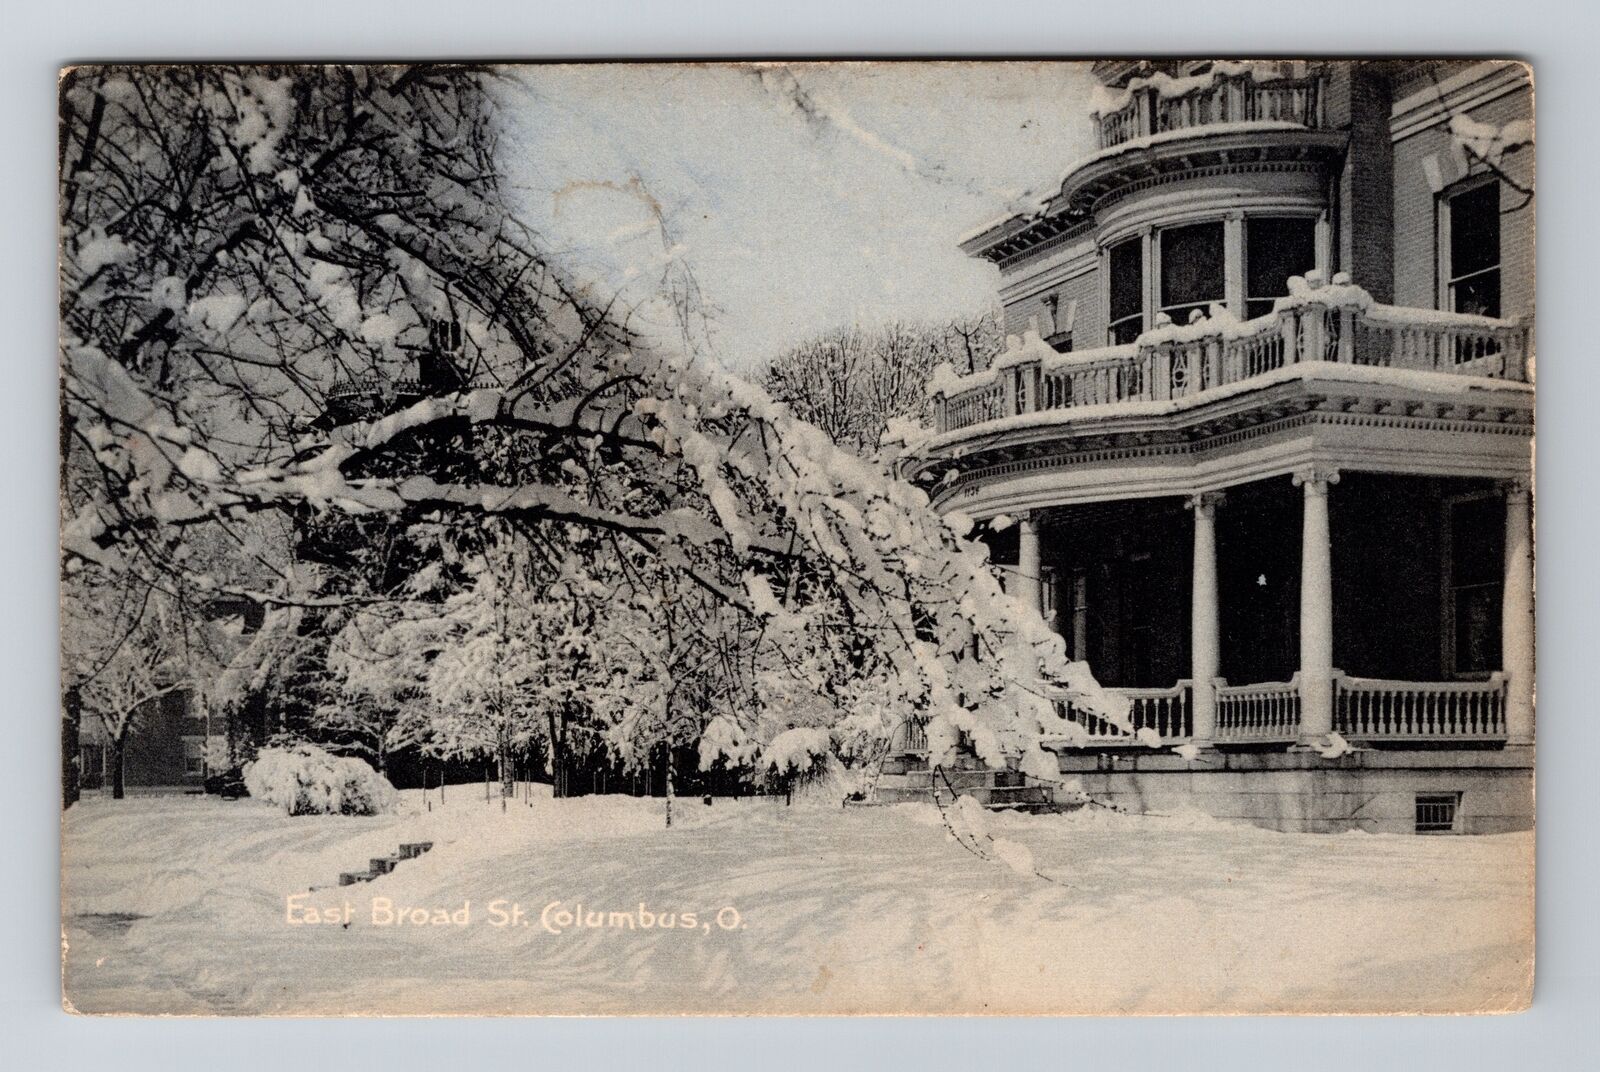 Columbus OH-Ohio, East Broad St Residences In Snow, Vintage Postcard